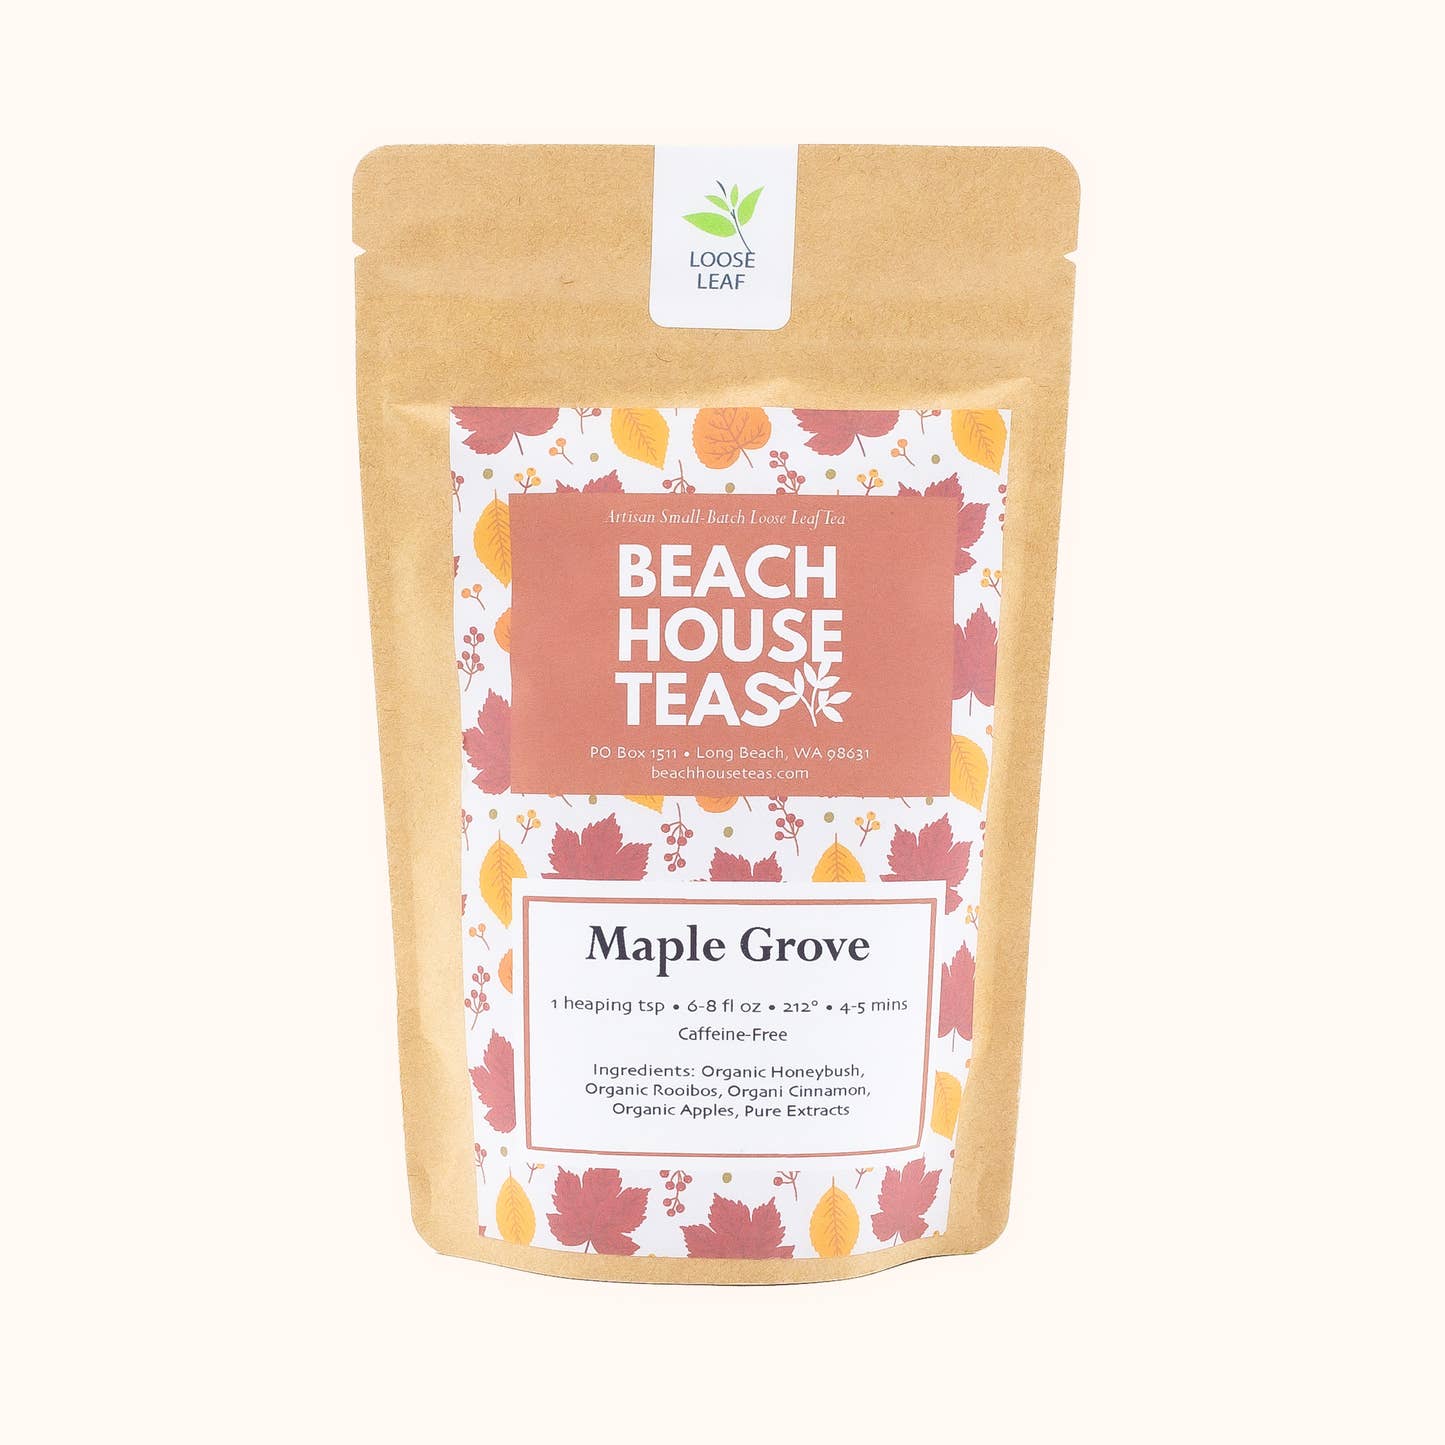 Maple Grove loose leaf tea by Beach House Teas printed kraft pouch with maple leaves